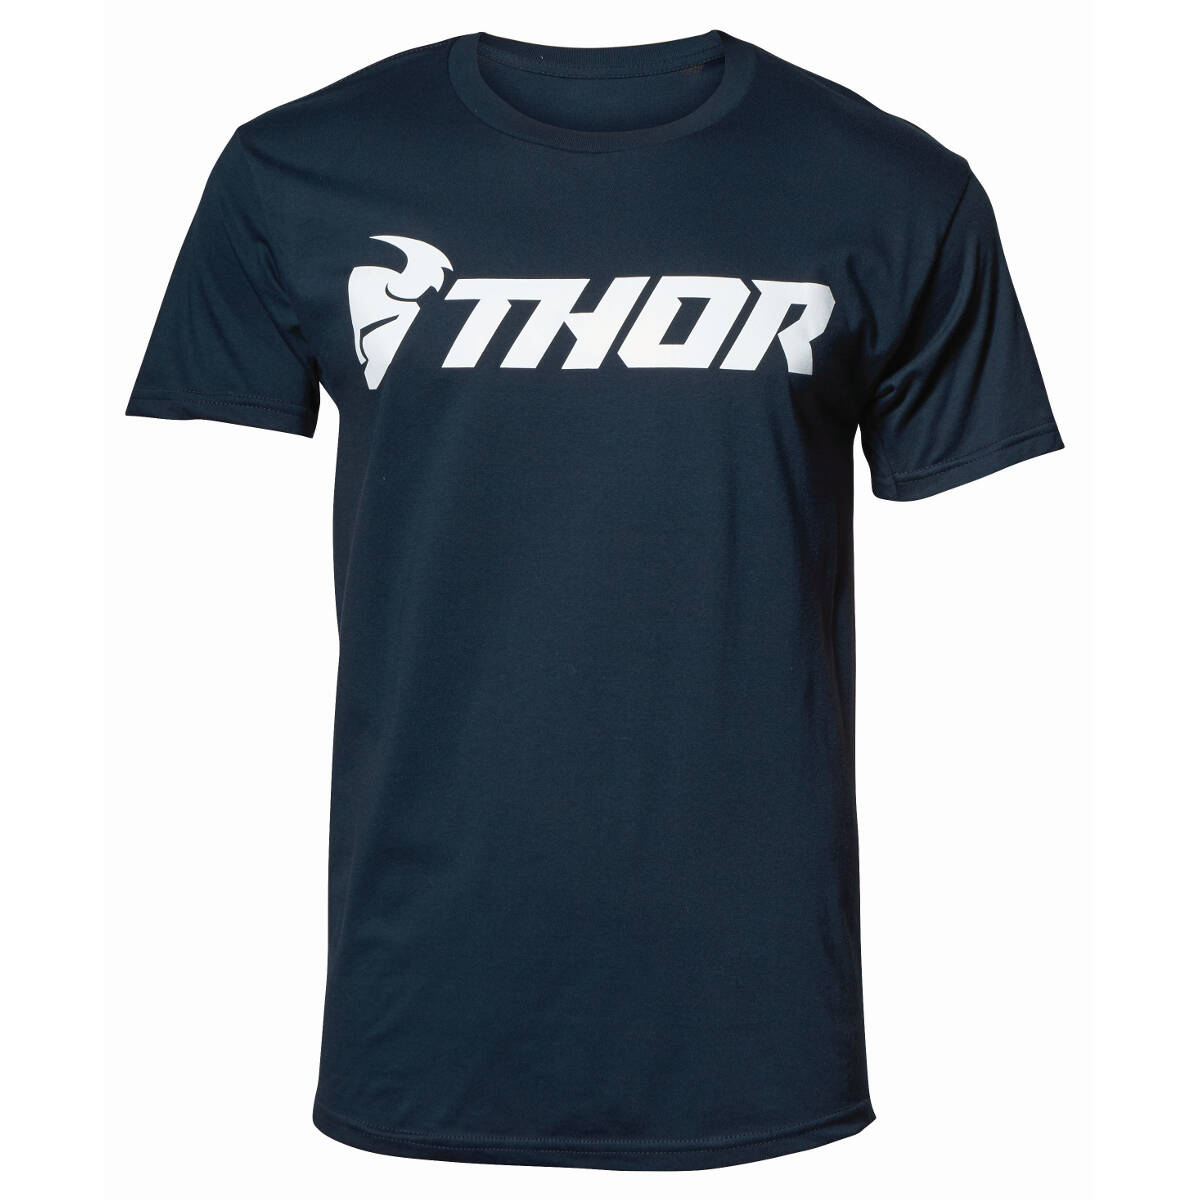 Thor T-Shirt Loud Navy